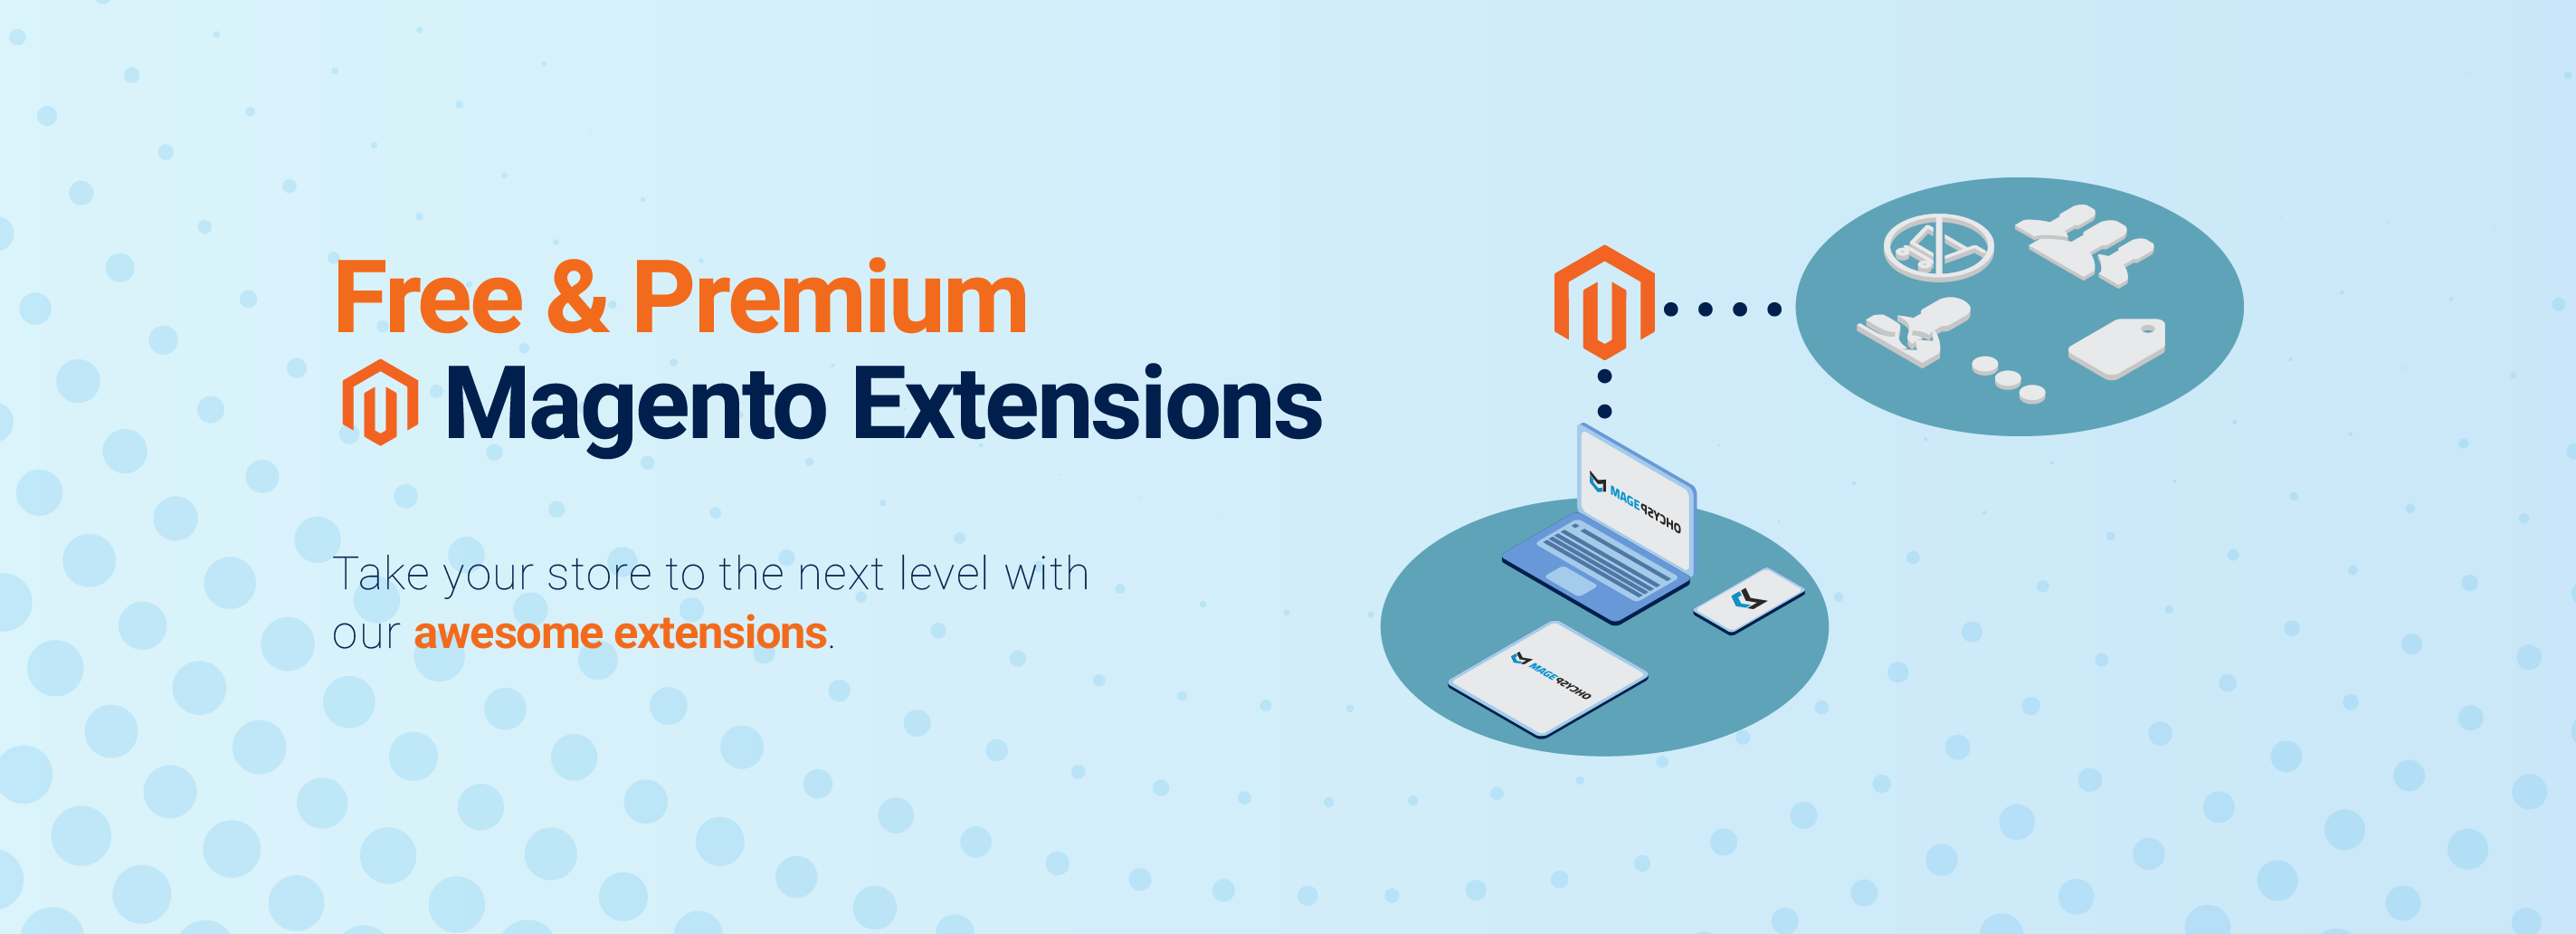 Quality FREE & Premium Adobe Magento Extensions